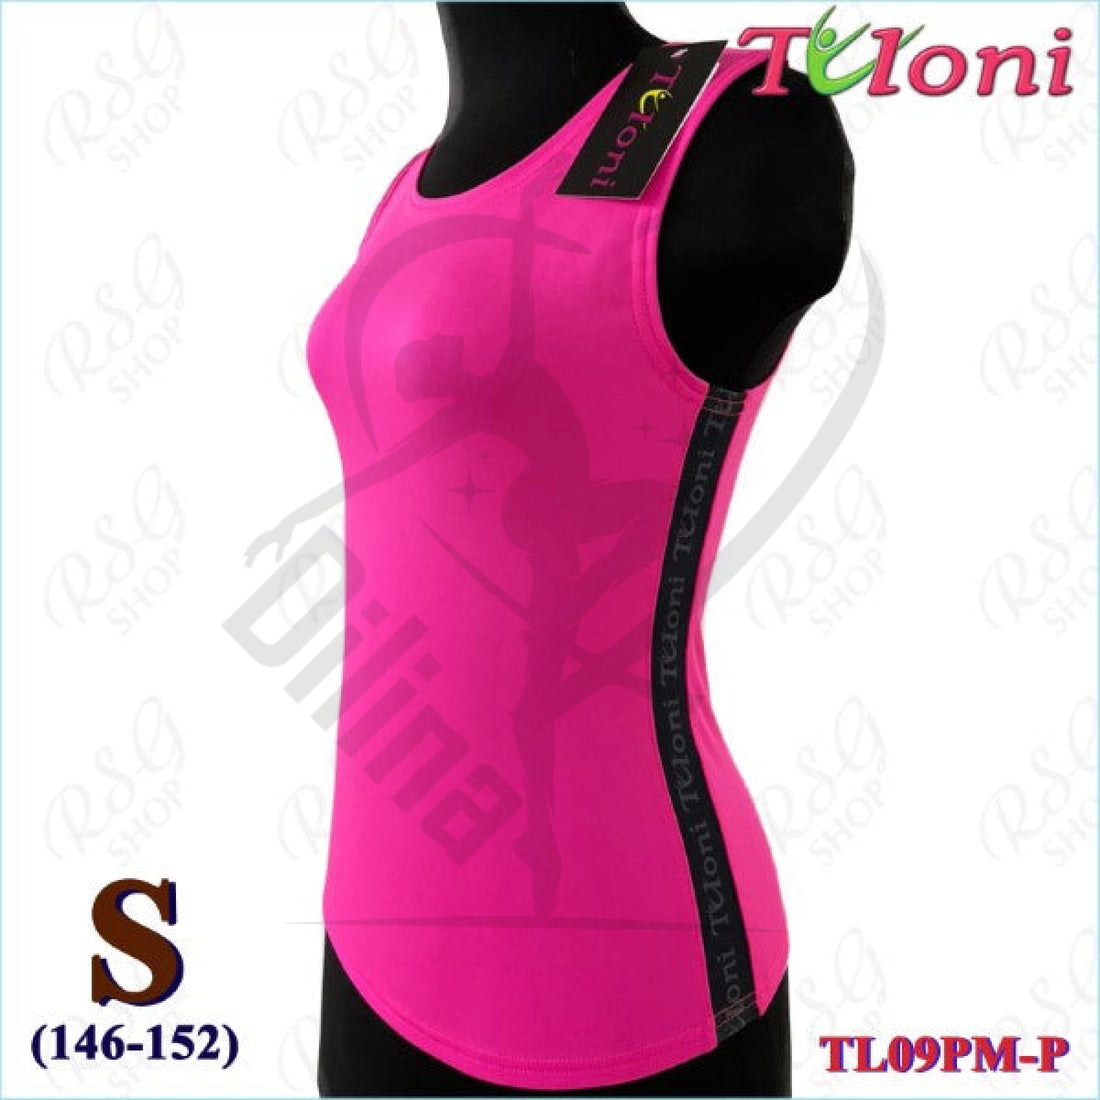 Tuloni Long Mesh Tank Top Pink S (146-152) T Shirts & Tops